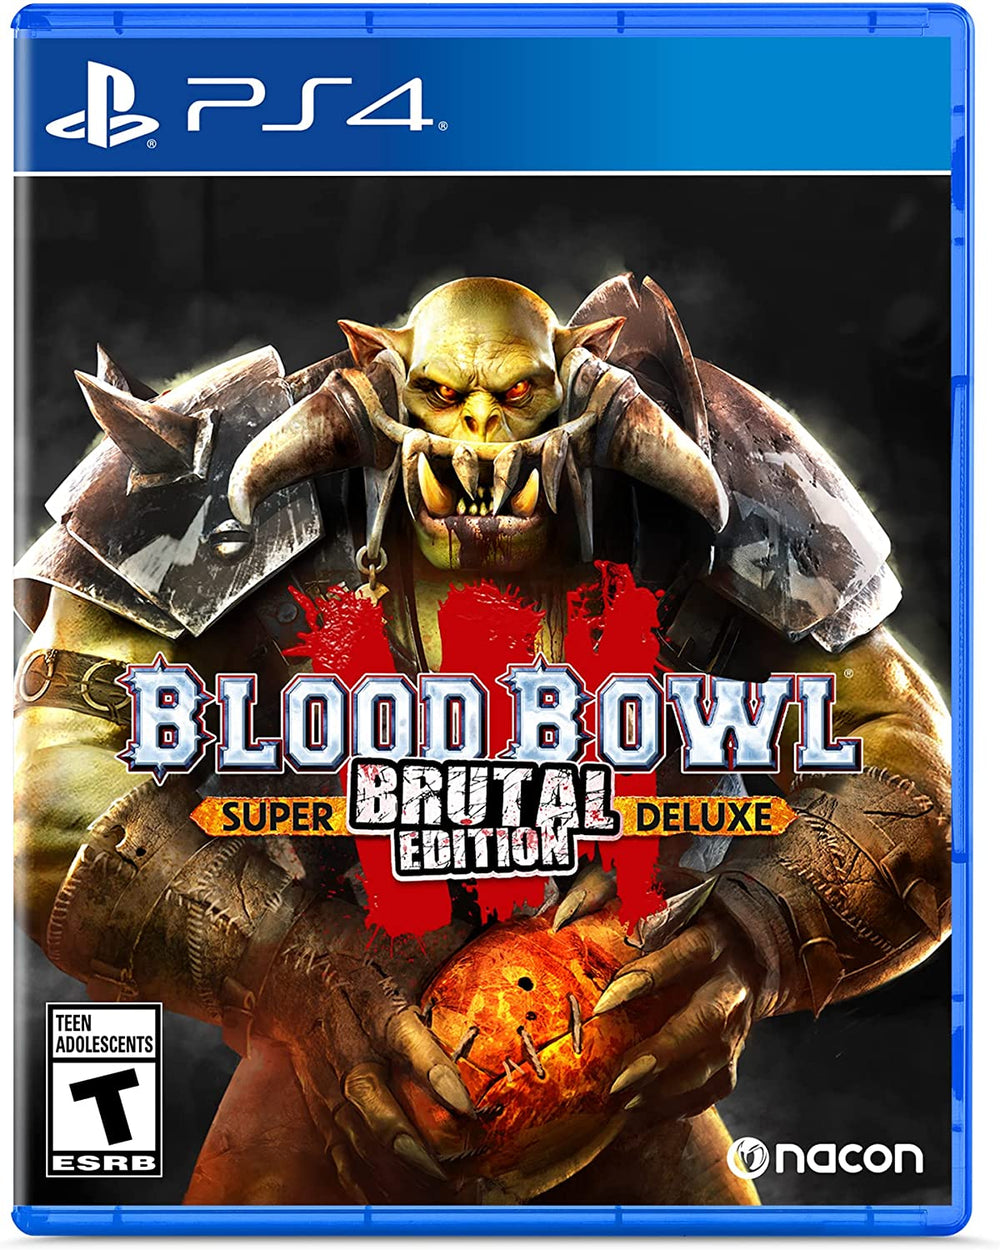 Blood Bowl 3 PS4